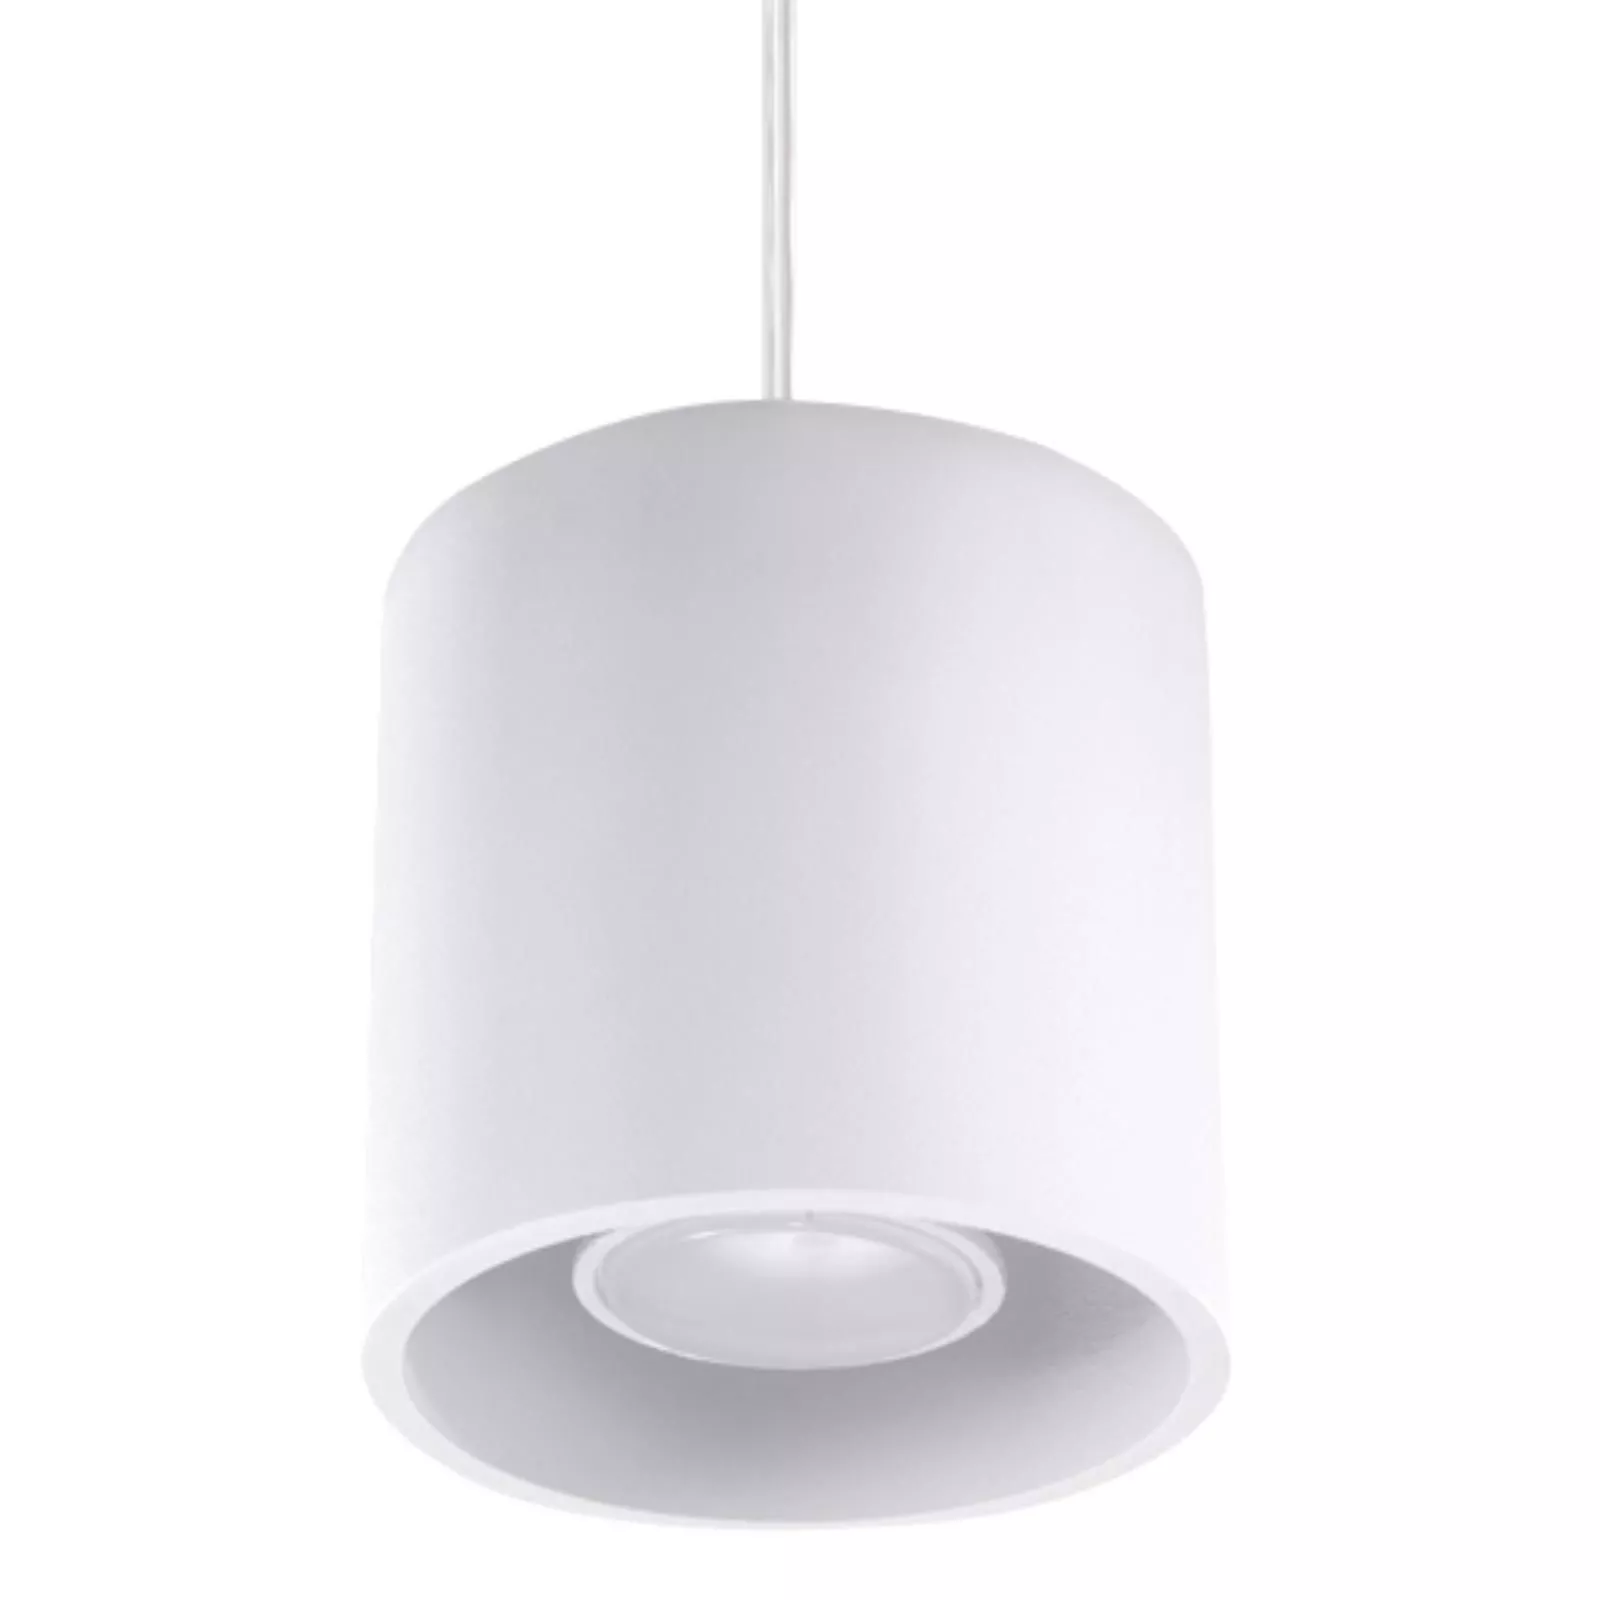 Lampadario pendente cilindro bianca per illuminazione bancone cucina  moderna - 7C8C